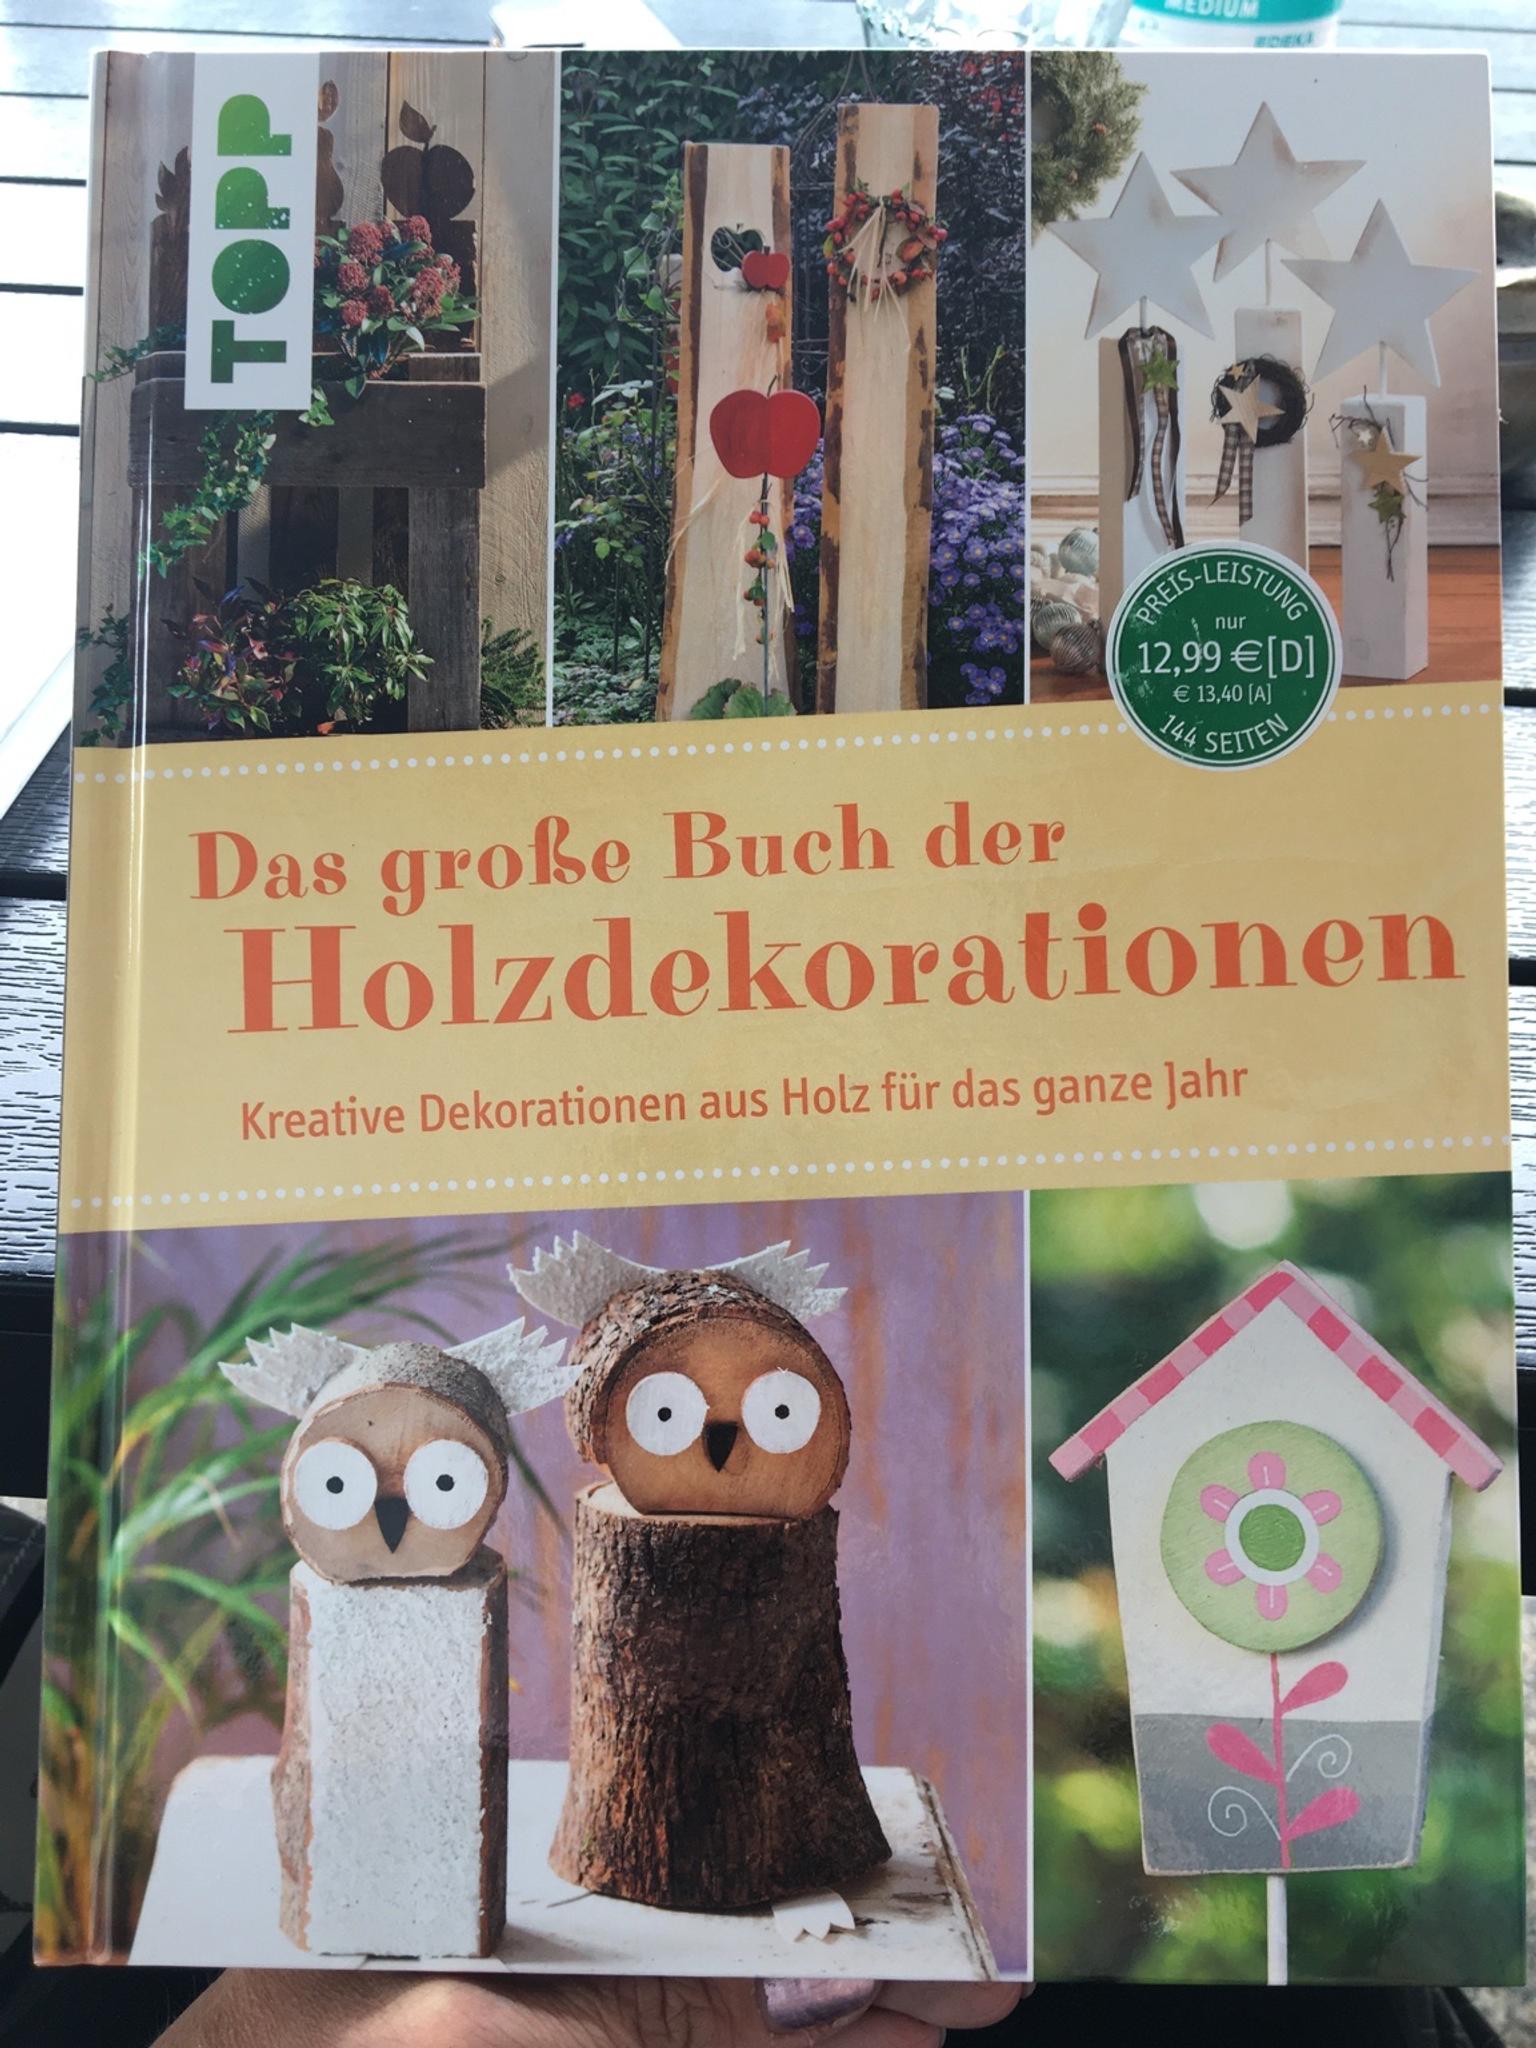 Holzdekoration Furs Ganze Jahr In Pfaffenhofen For 6 00 For Sale Shpock